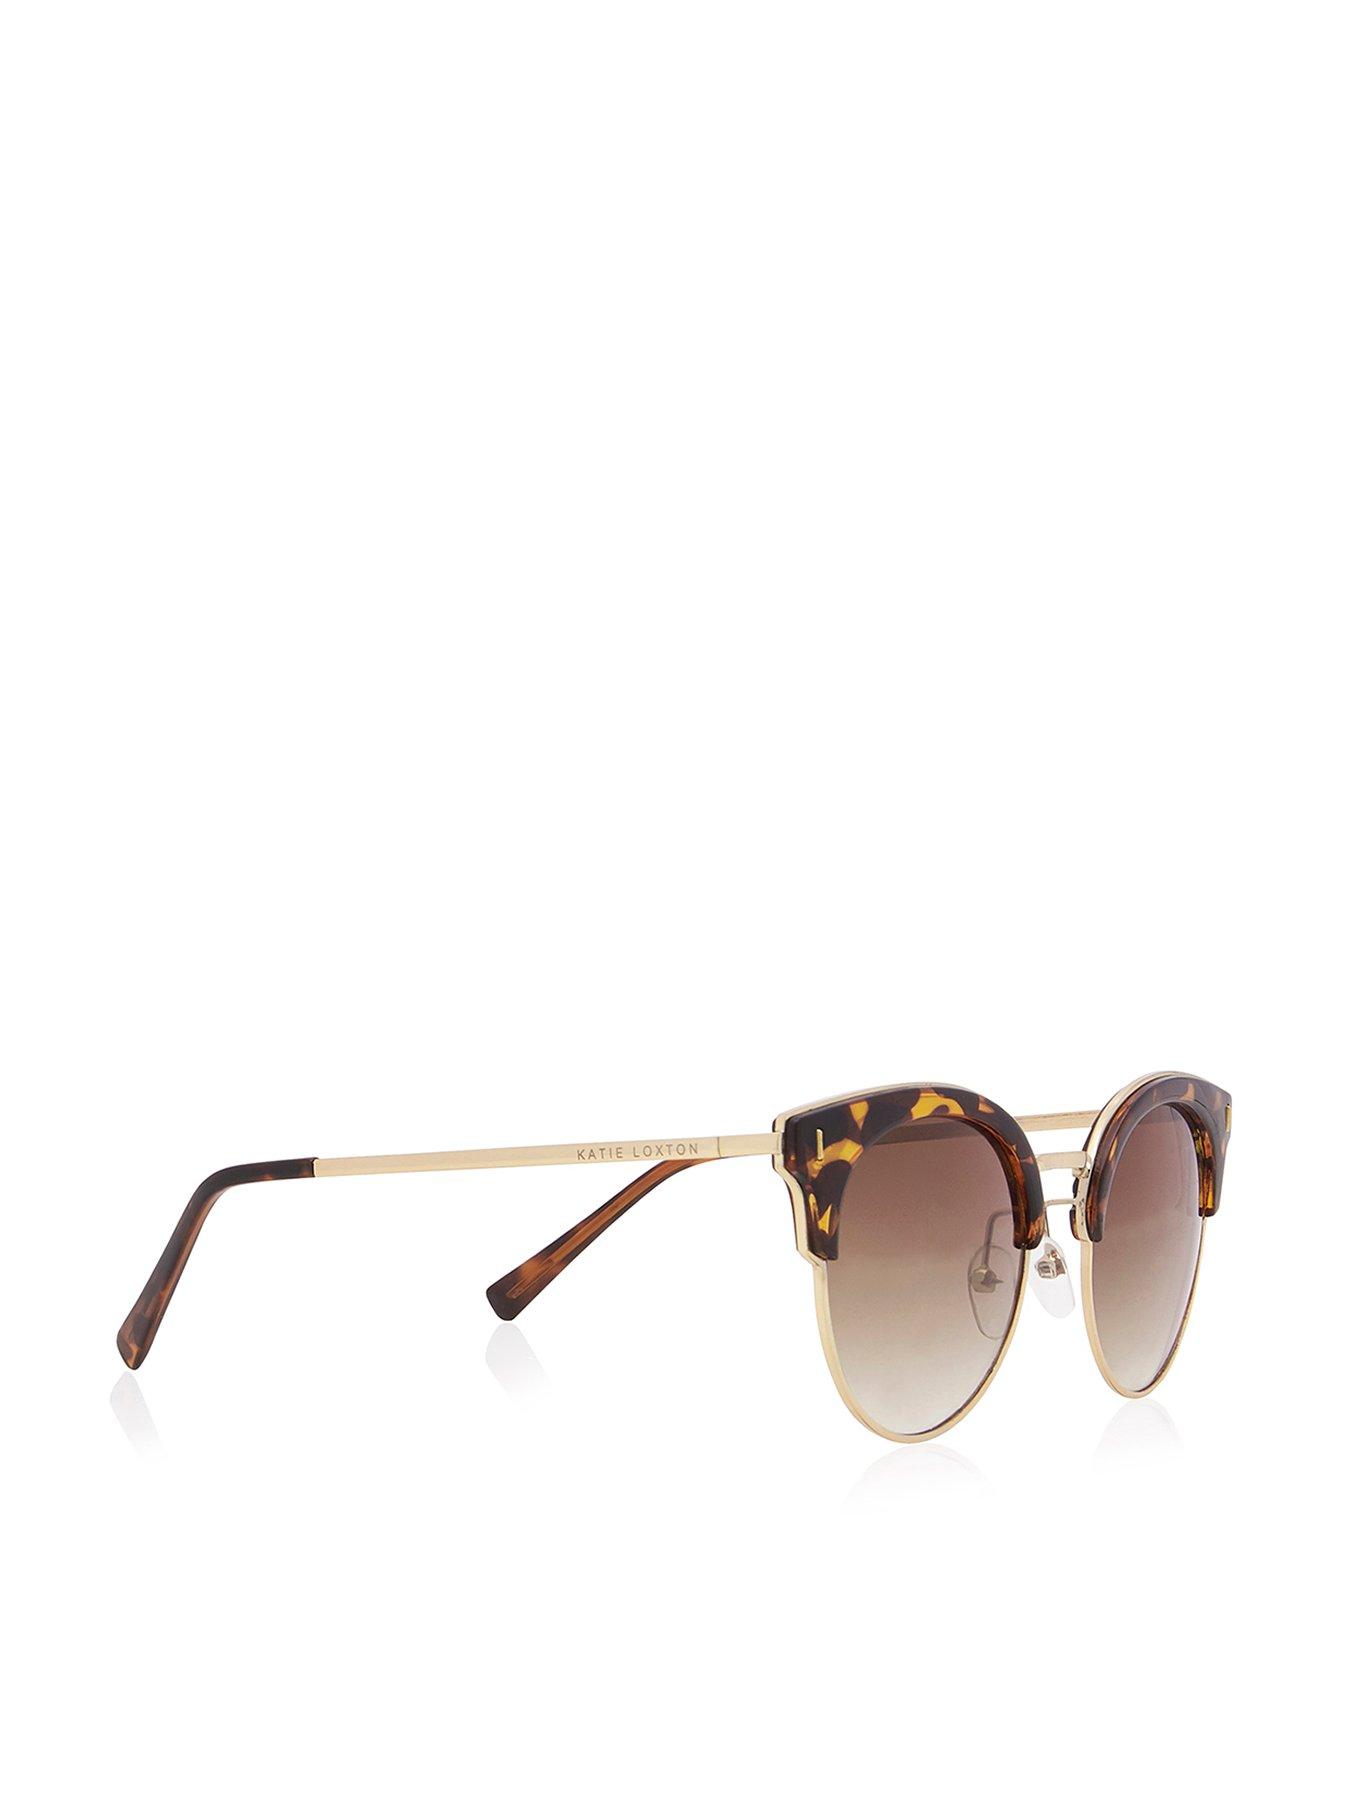  Cateye Sunglasses - Gold